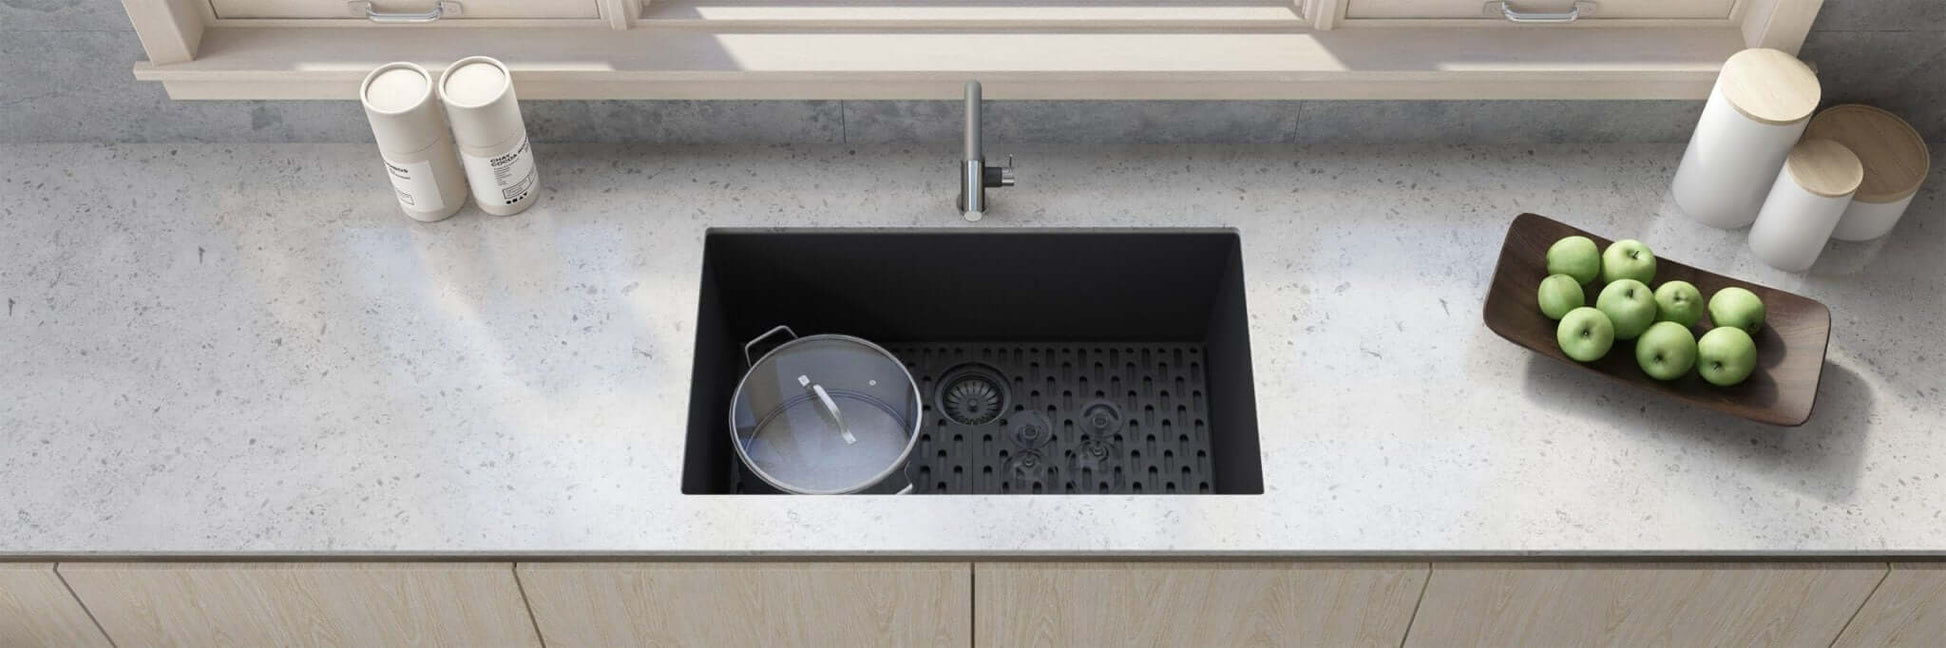 Ruvati 30" x 18" Granite Composite Undermount Single Bowl Kitchen Sink - RVG2030